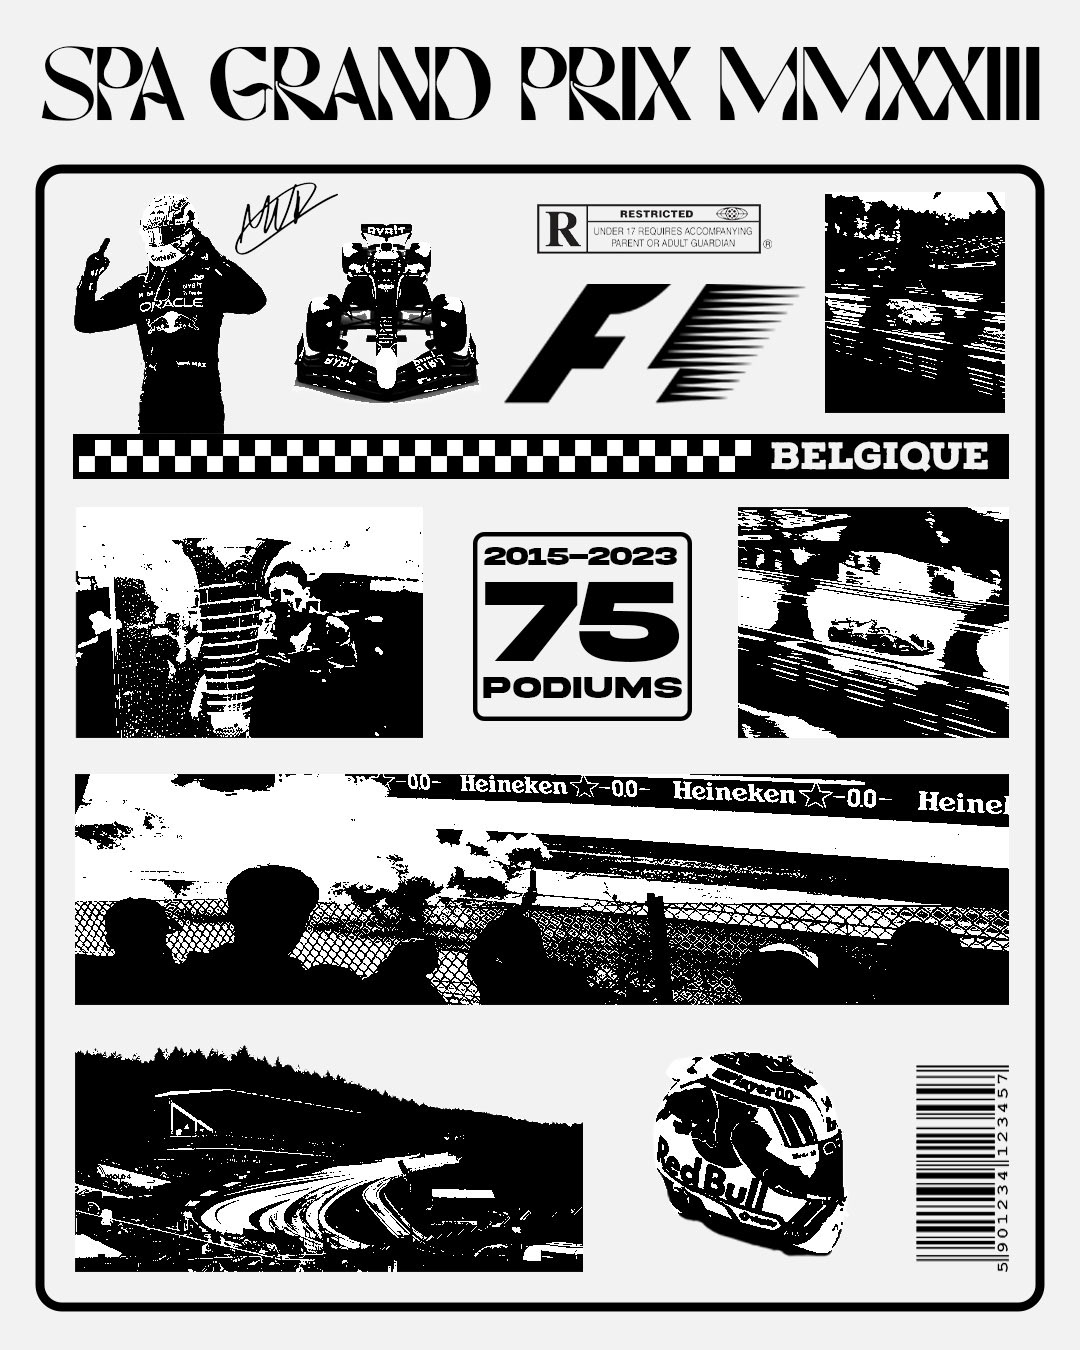 Spa GRAND PRIX f1 Verstappen poster